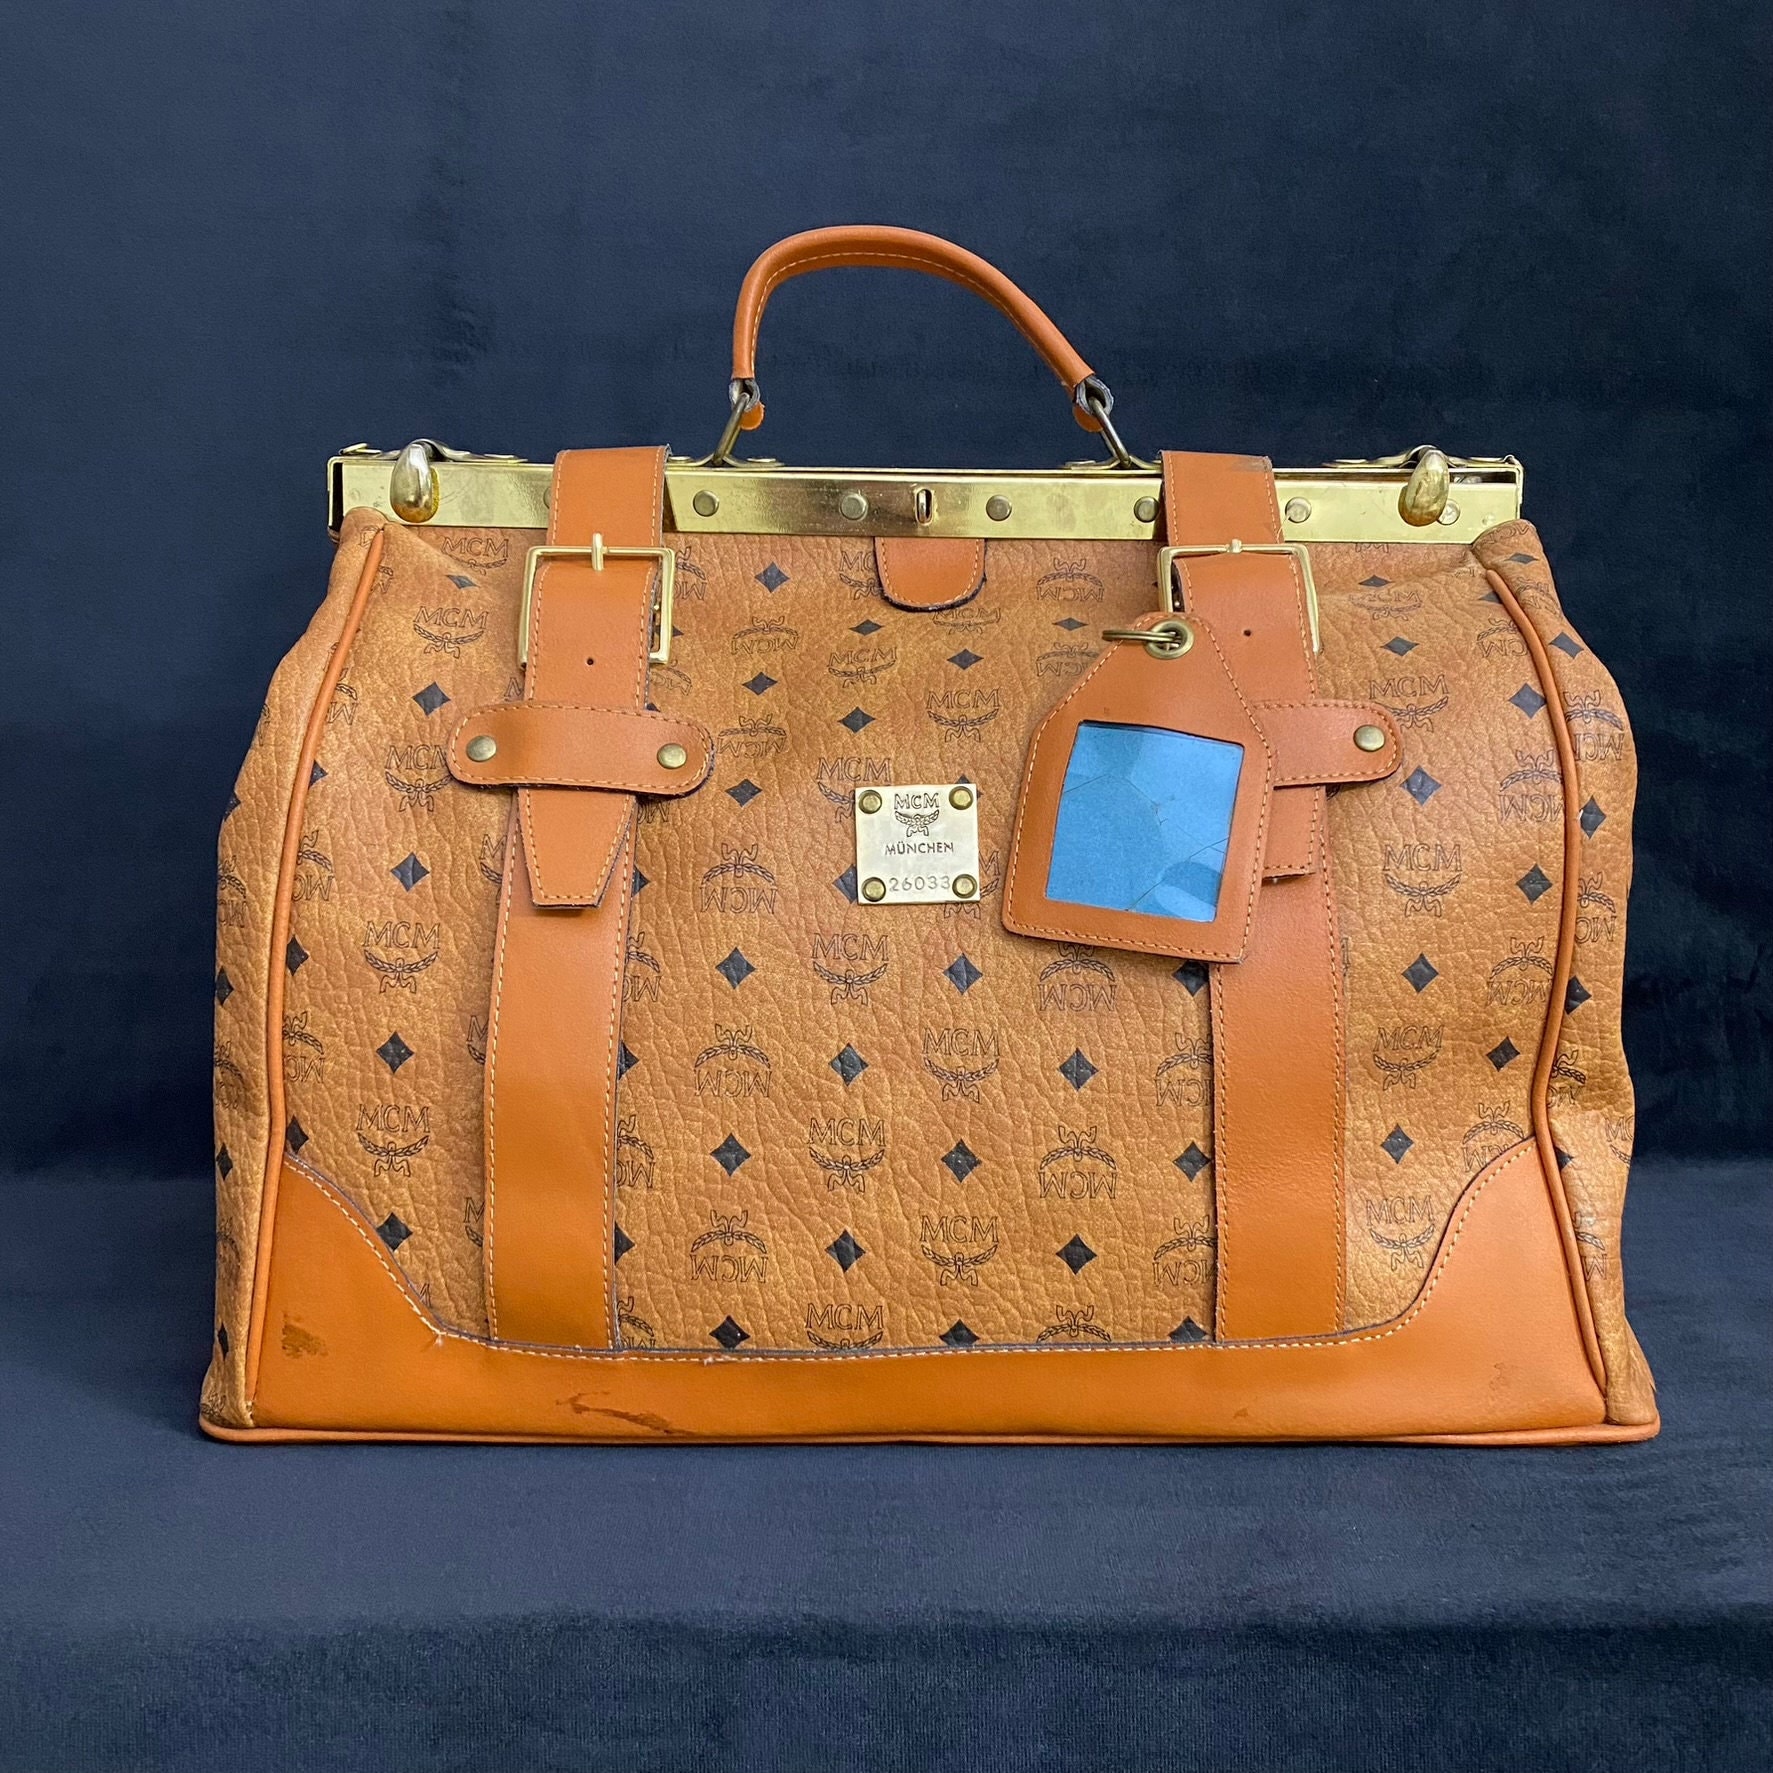 New MCM Black/Orange Leather Pouch Clutch Bag Wallet NEW Rare Original  Authentic